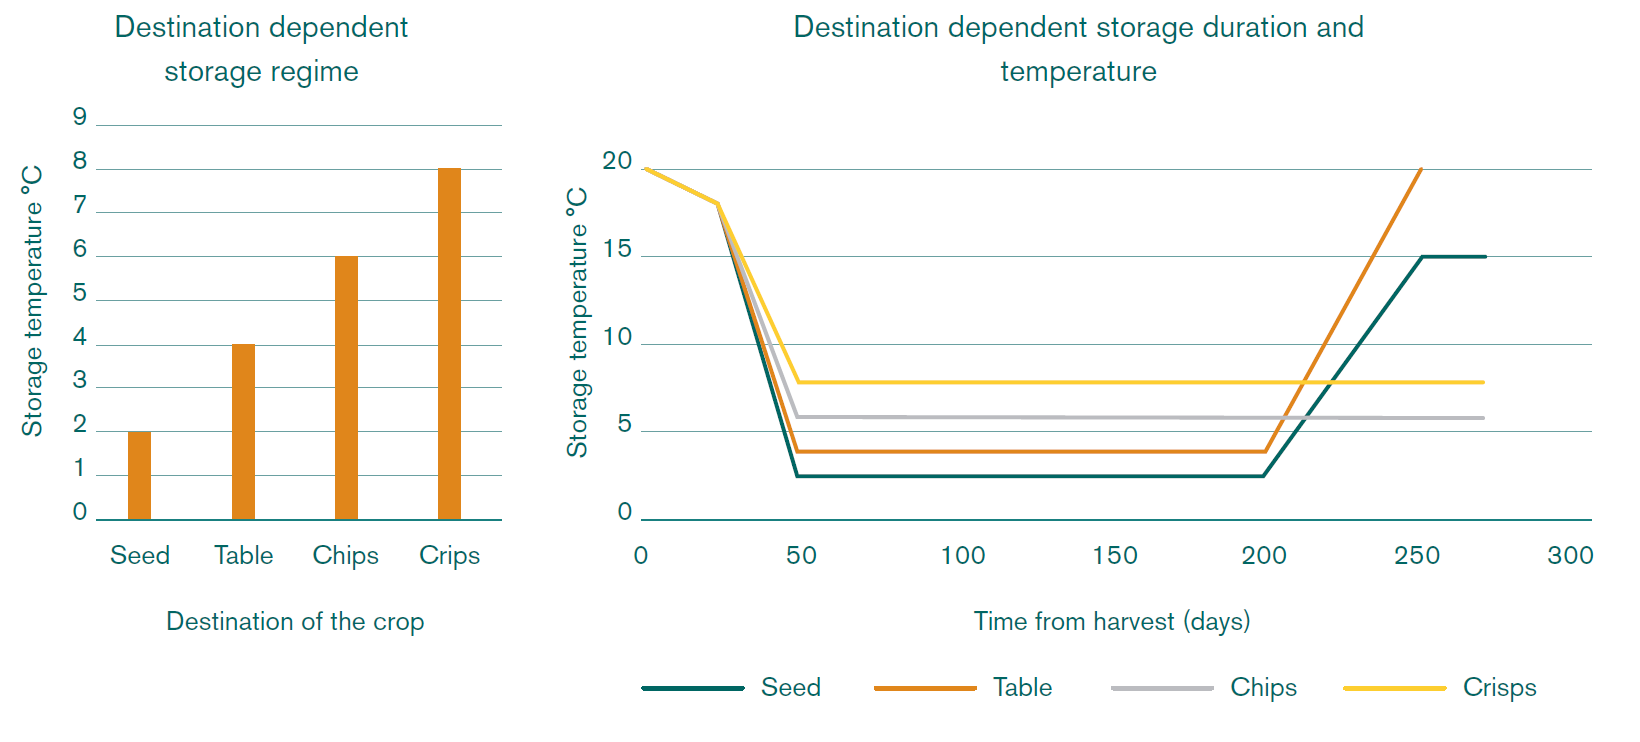 Destination dependent potato storage regime, duration and temperature